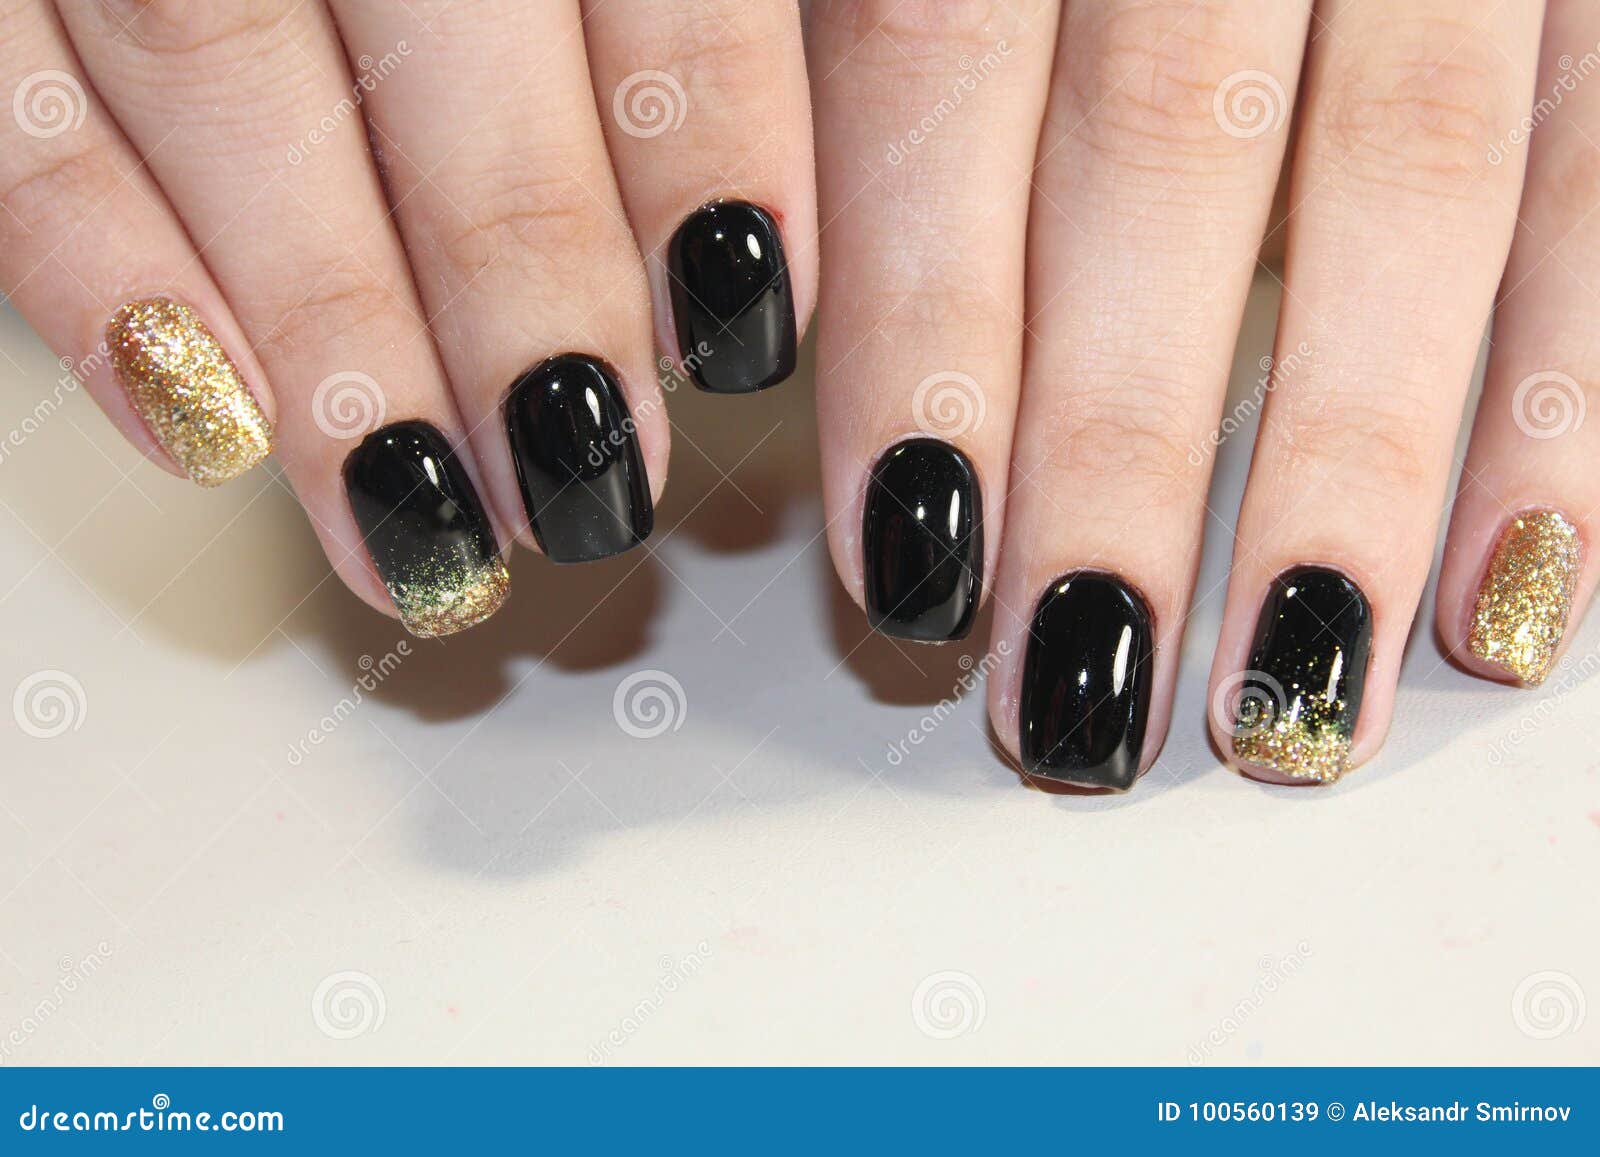 10 Black and Gold Nail Design  BeautyBigBang